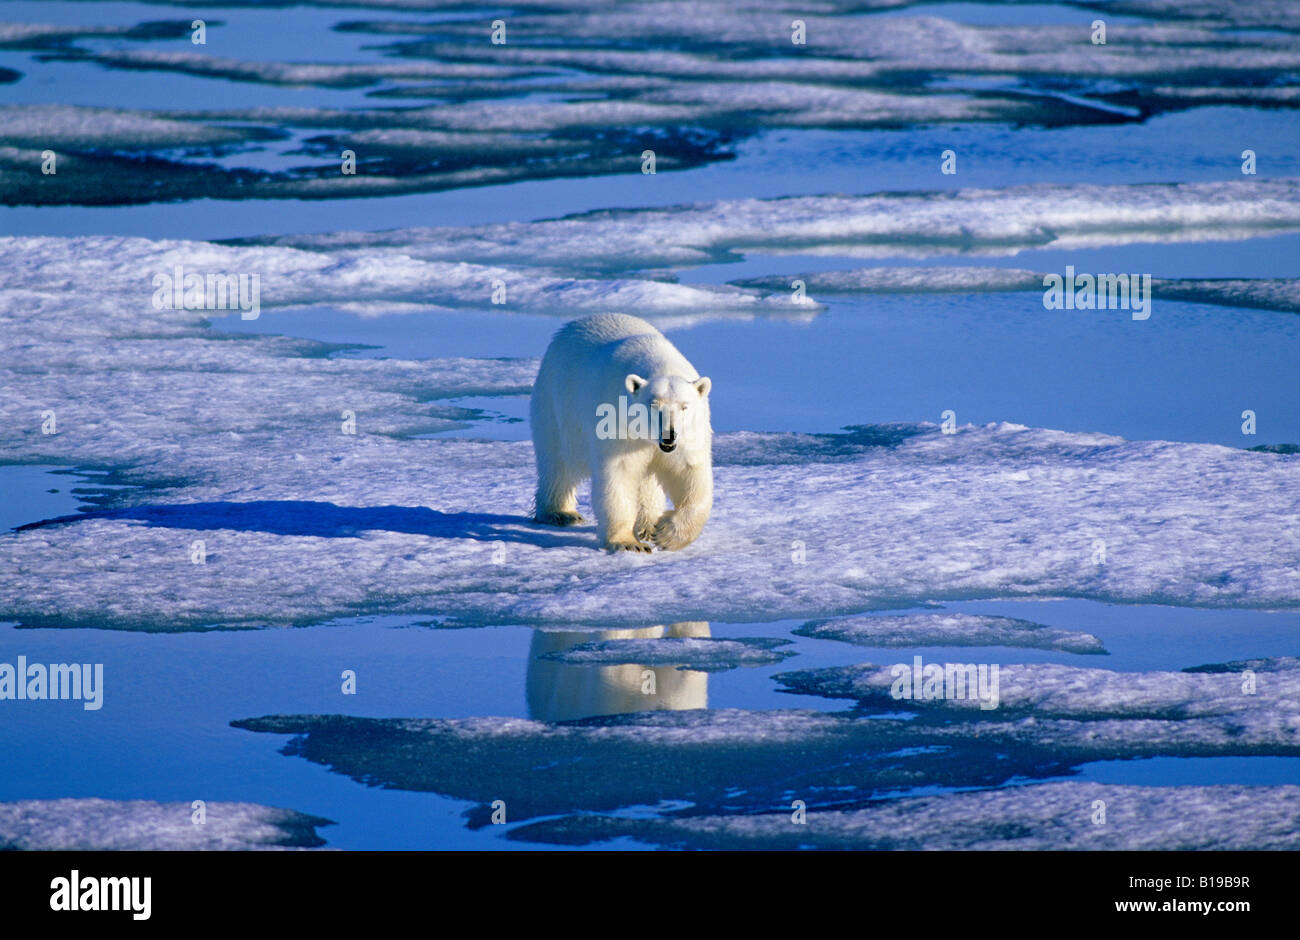 Polar bear (Ursus maritimus) hunting on the pack ice, Svalbard Archipelago, Arctic Norway Stock Photo